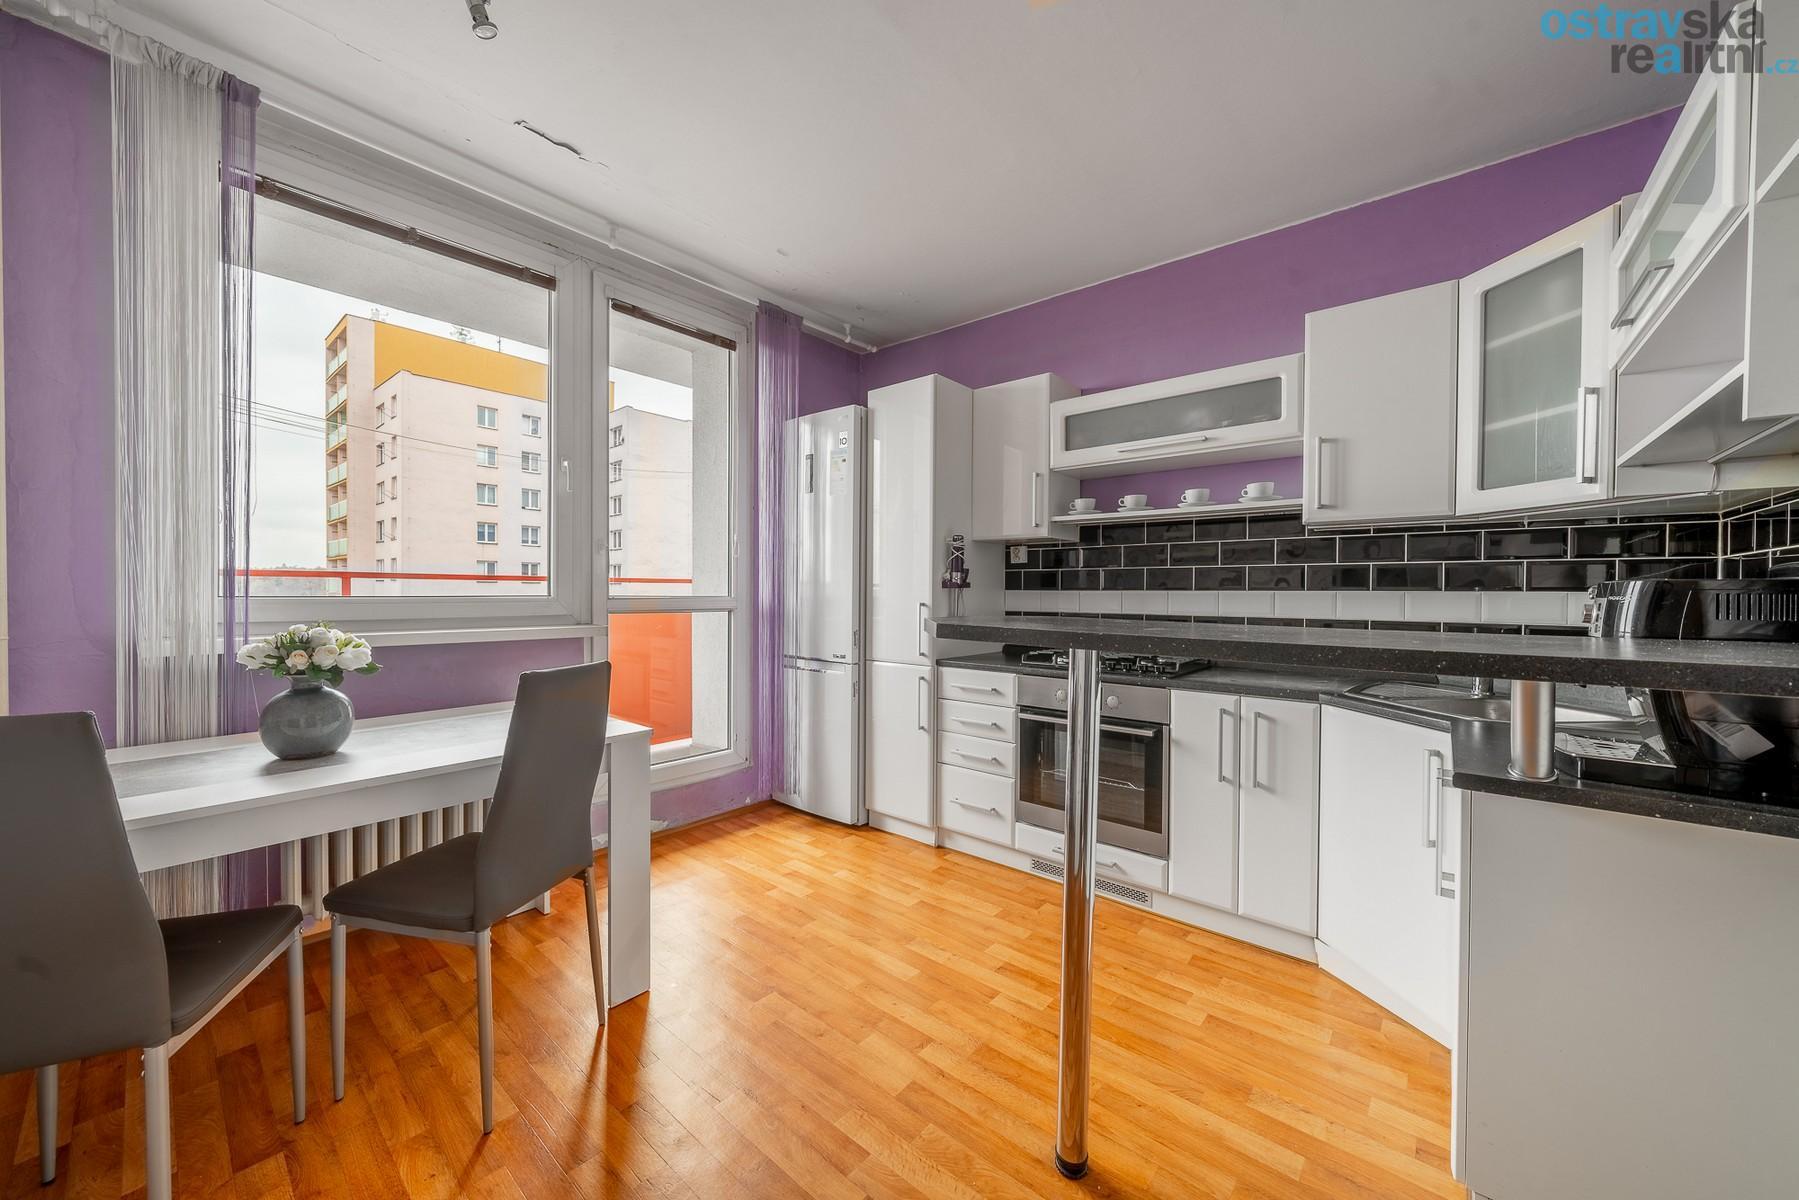 Prodej, byt 3+1 Ostrava - Dubina, ul. Zdeňka Bára, balkón, 68 m2